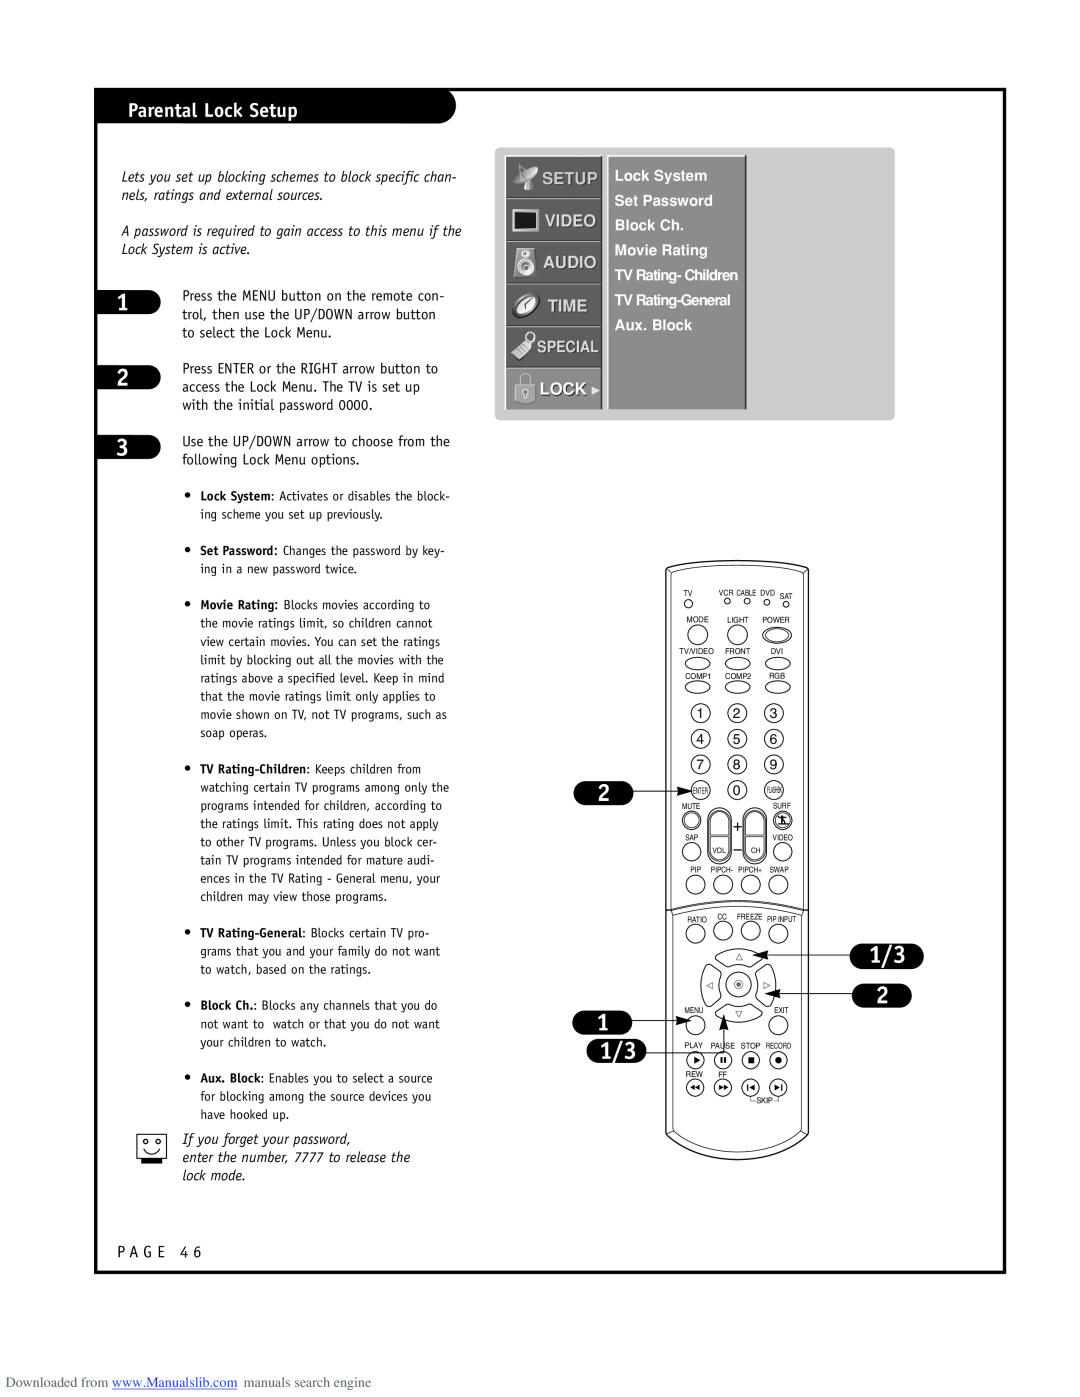 LG Electronics RU-52SZ53D owner manual Parental Lock Setup, Video Audio Time, Lock G, Special, TV Rating-General Aux. Block 